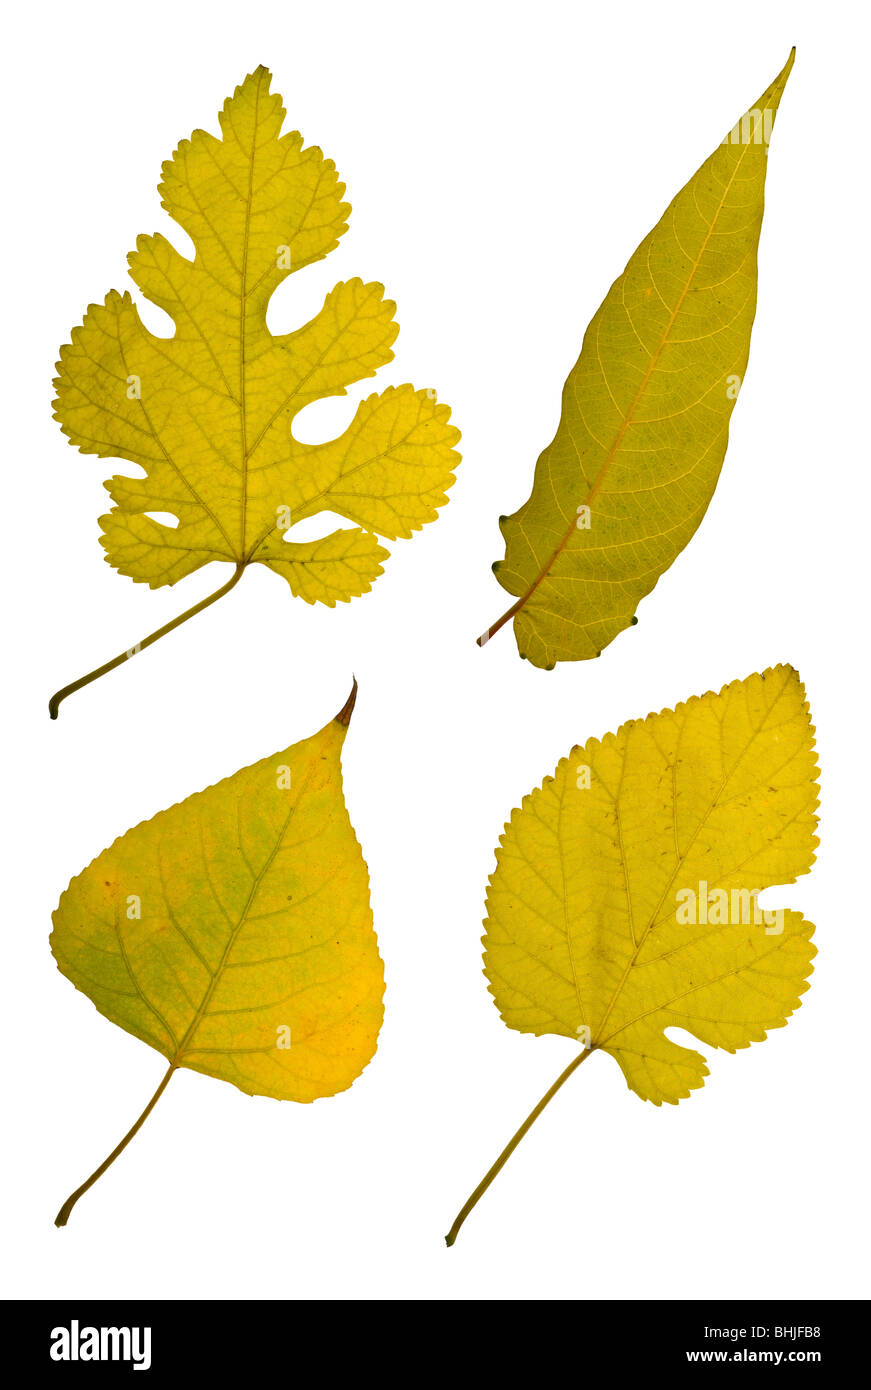 Autumn leaves isolated on white background Stock Photo